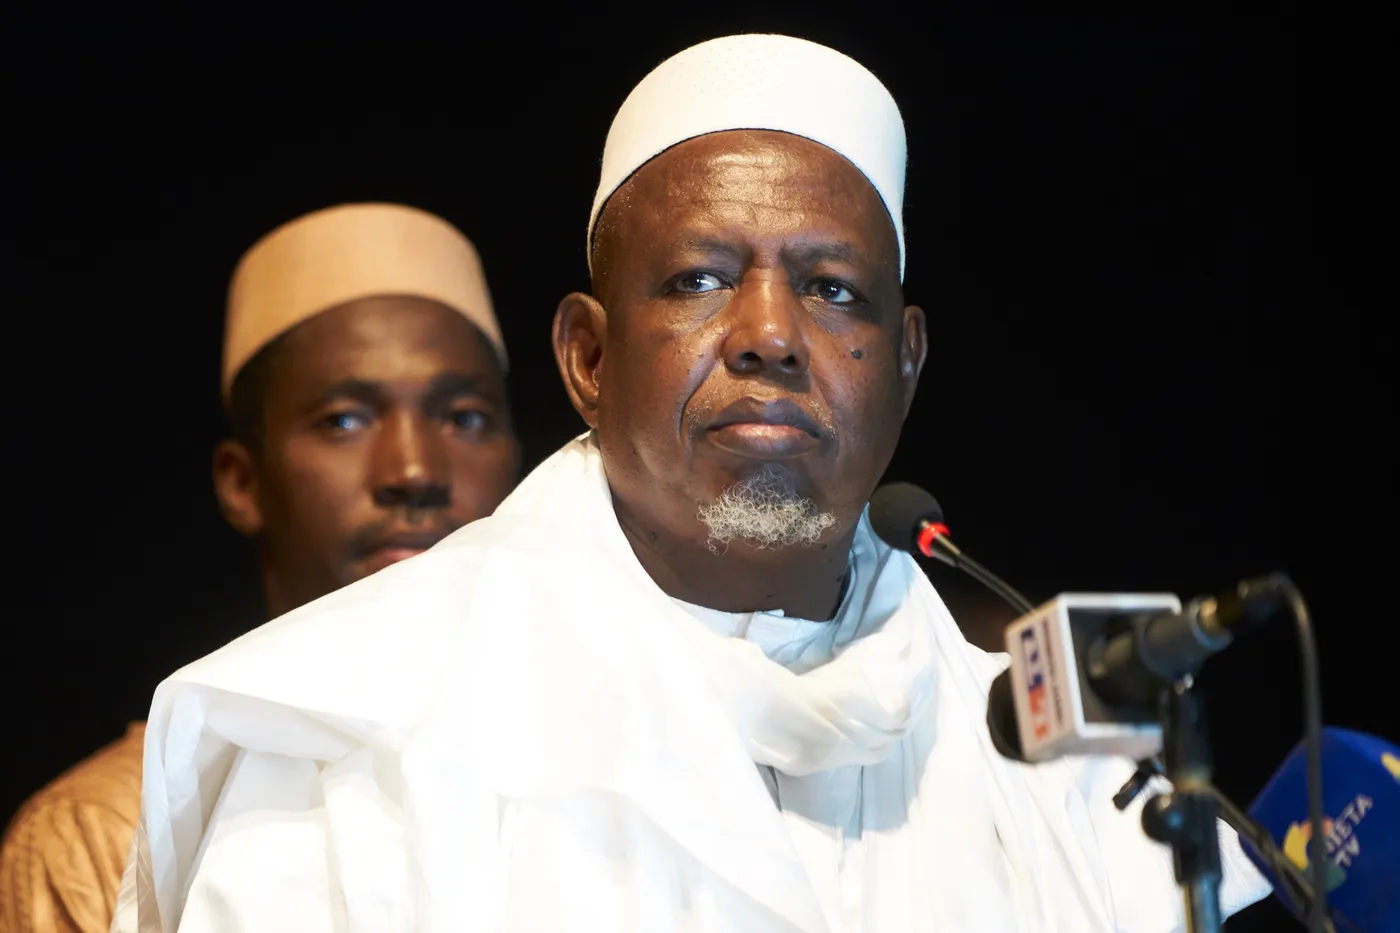 Mahmoud Dicko plateforme heterocycle M5 mouvement 5 Juin retrouve decus president malien 0